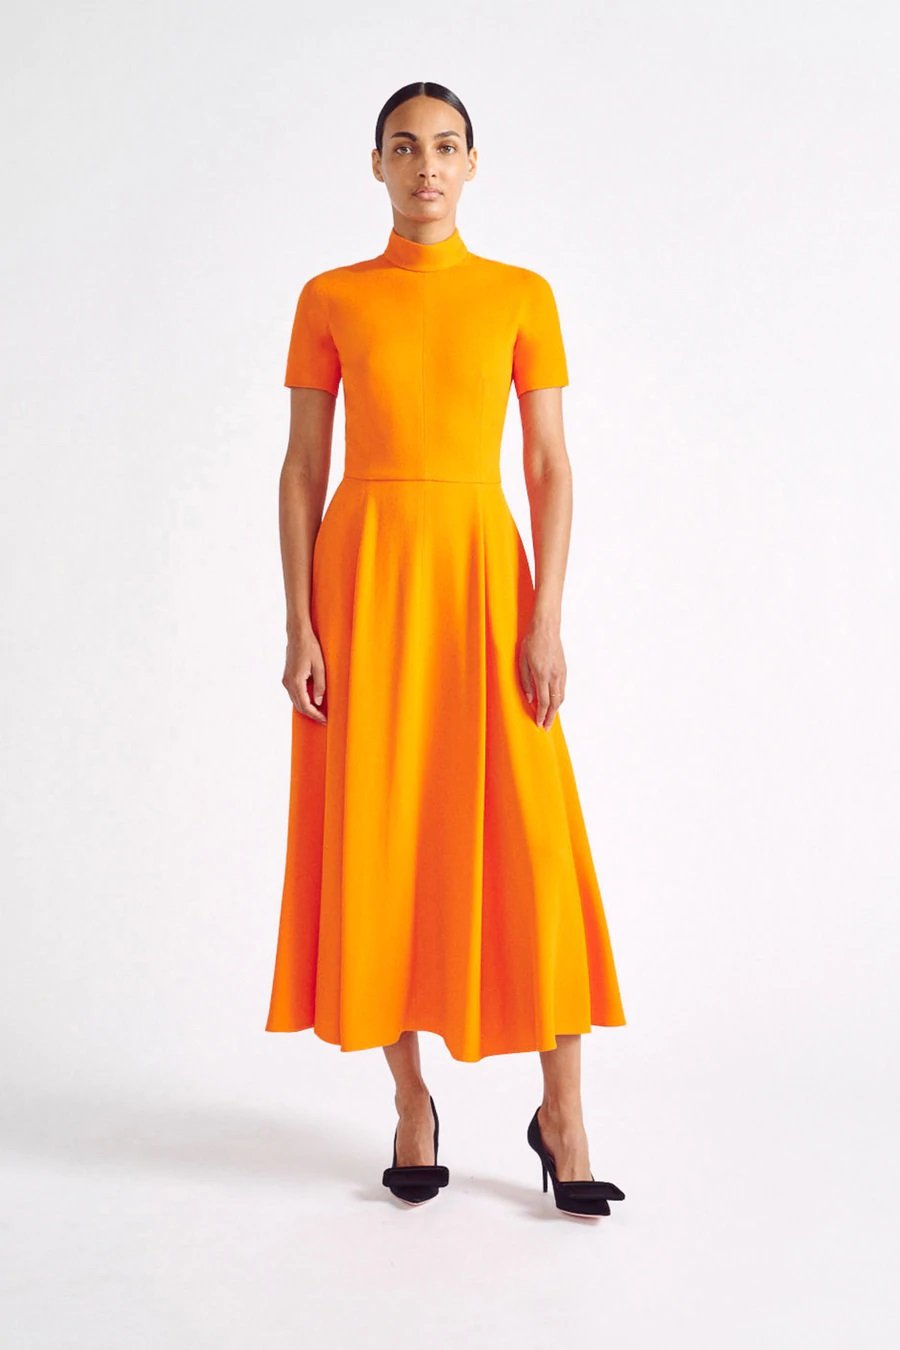 Emilia Wickstead Amila Dress in Orange.jpg